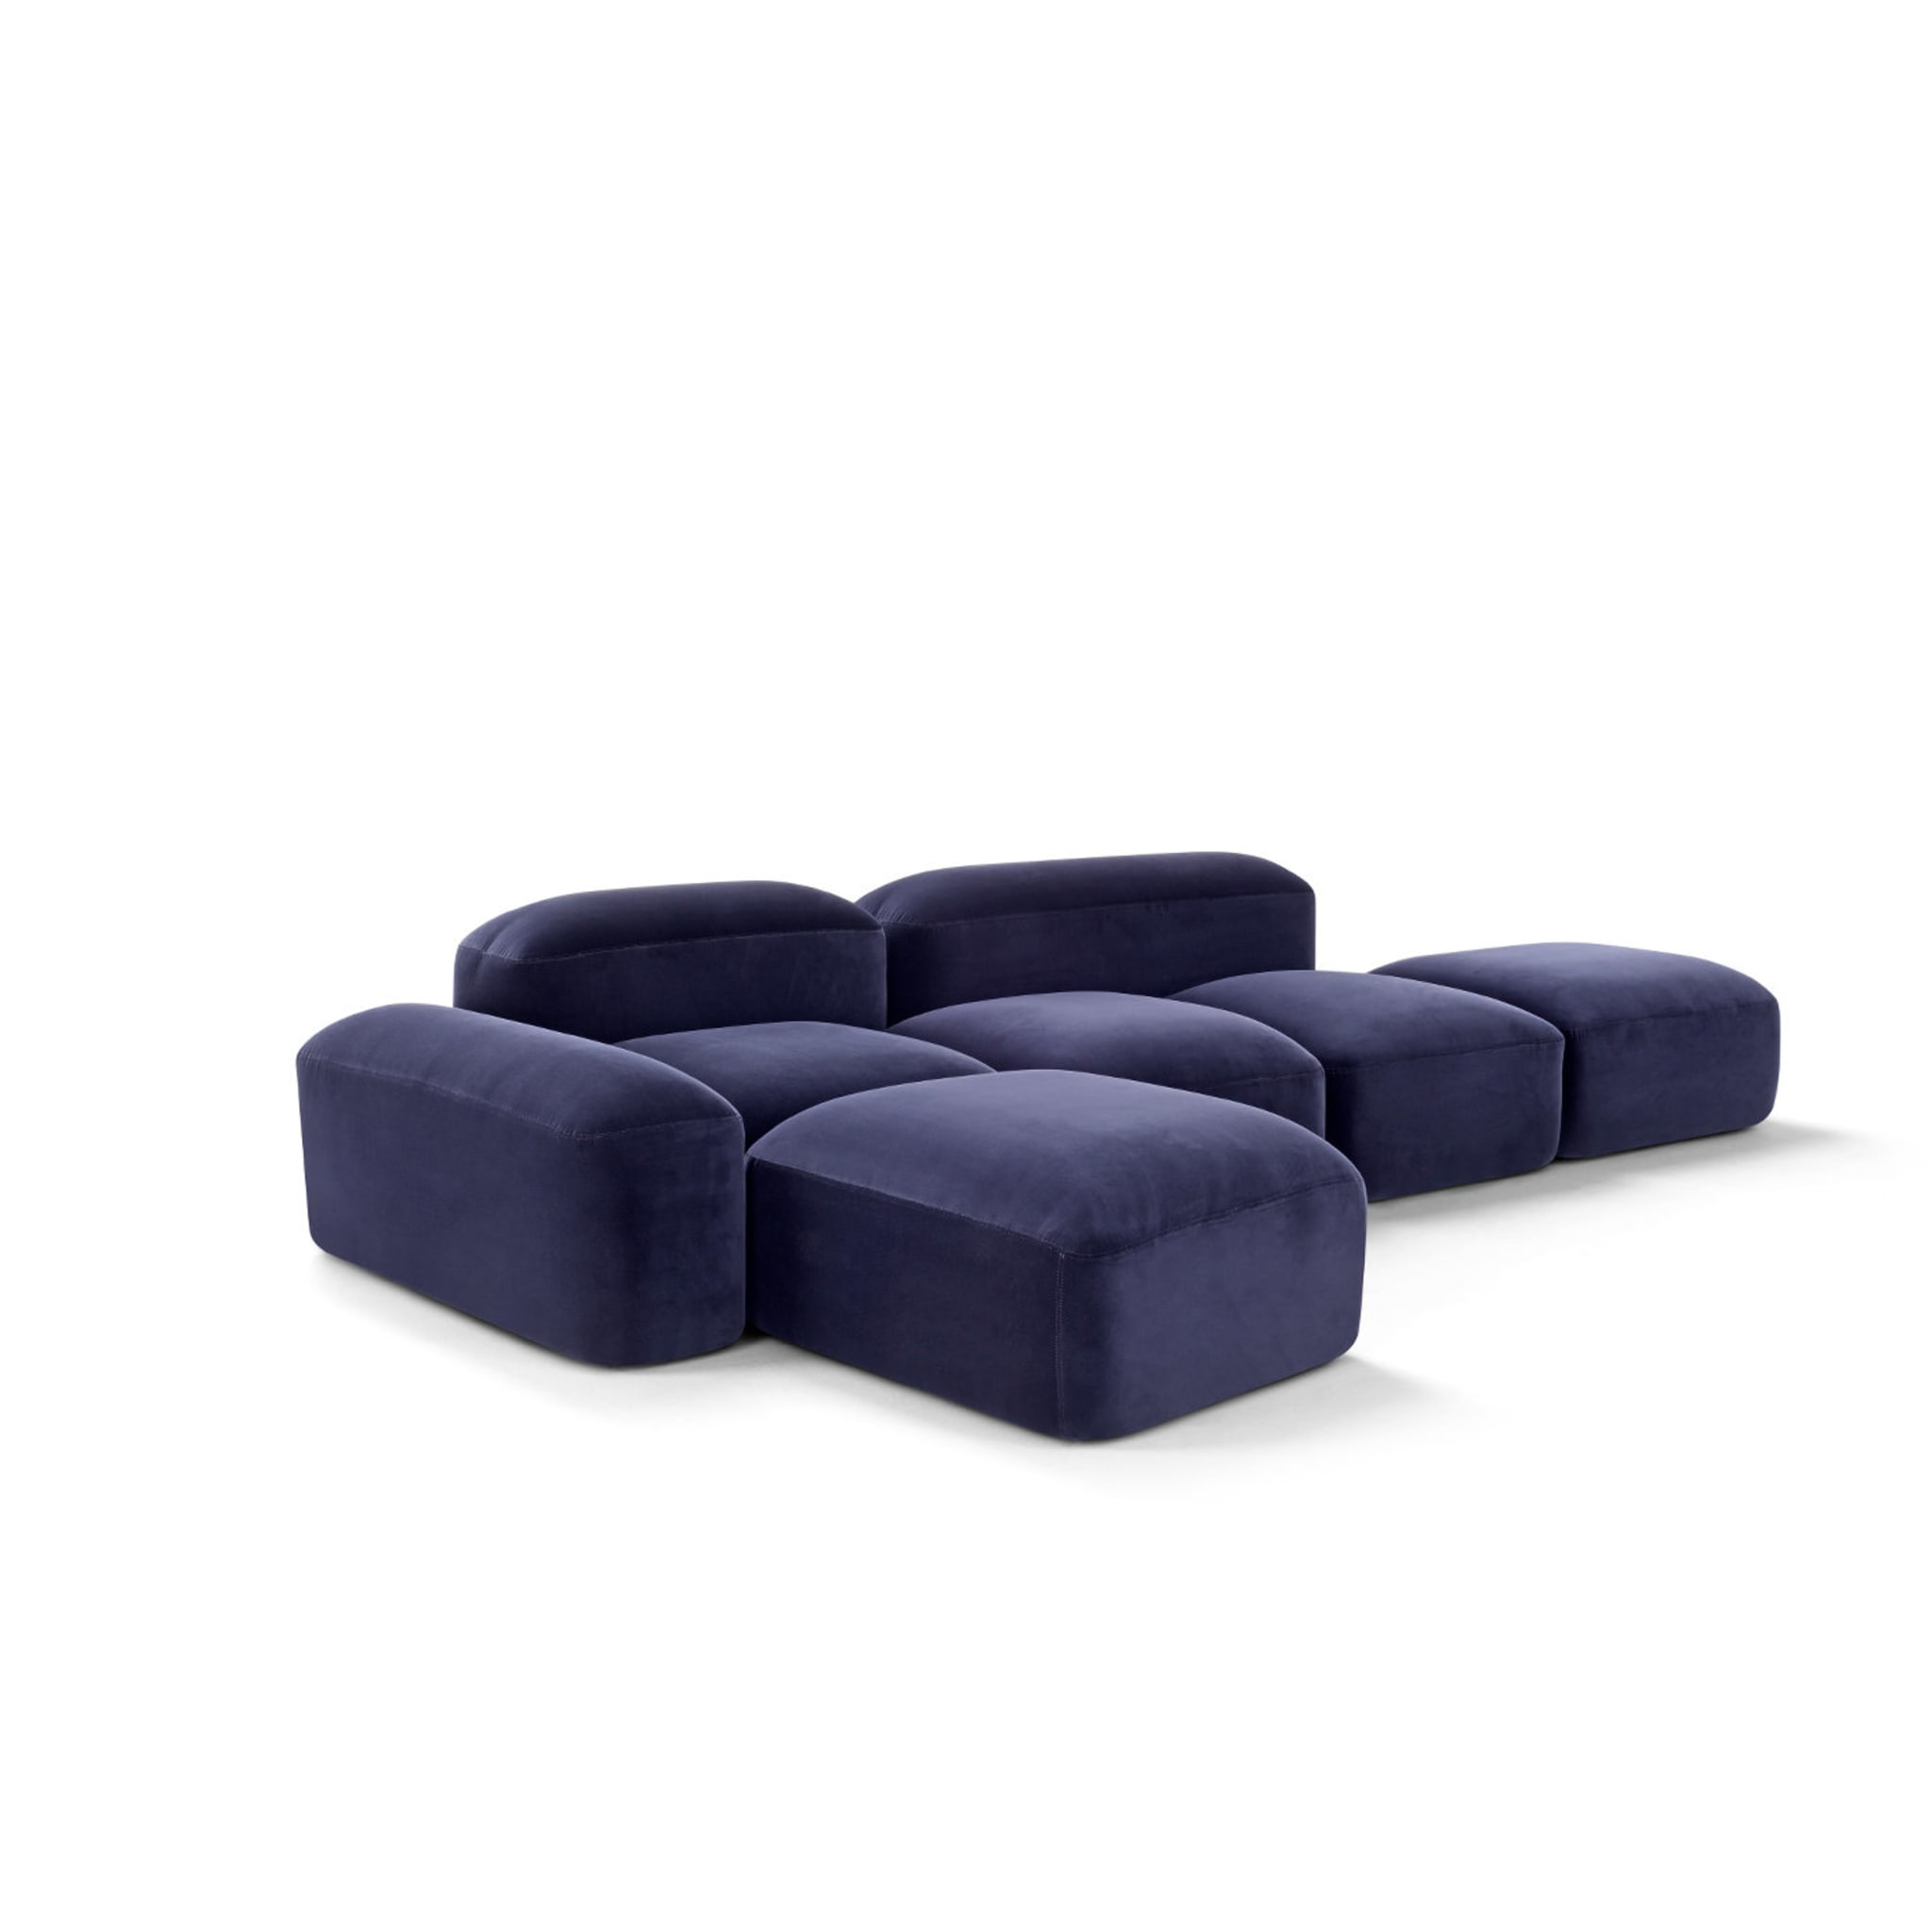  Lapis Blue Sofa by Emanuel Gargano and Anton Cristell - Alternative view 1